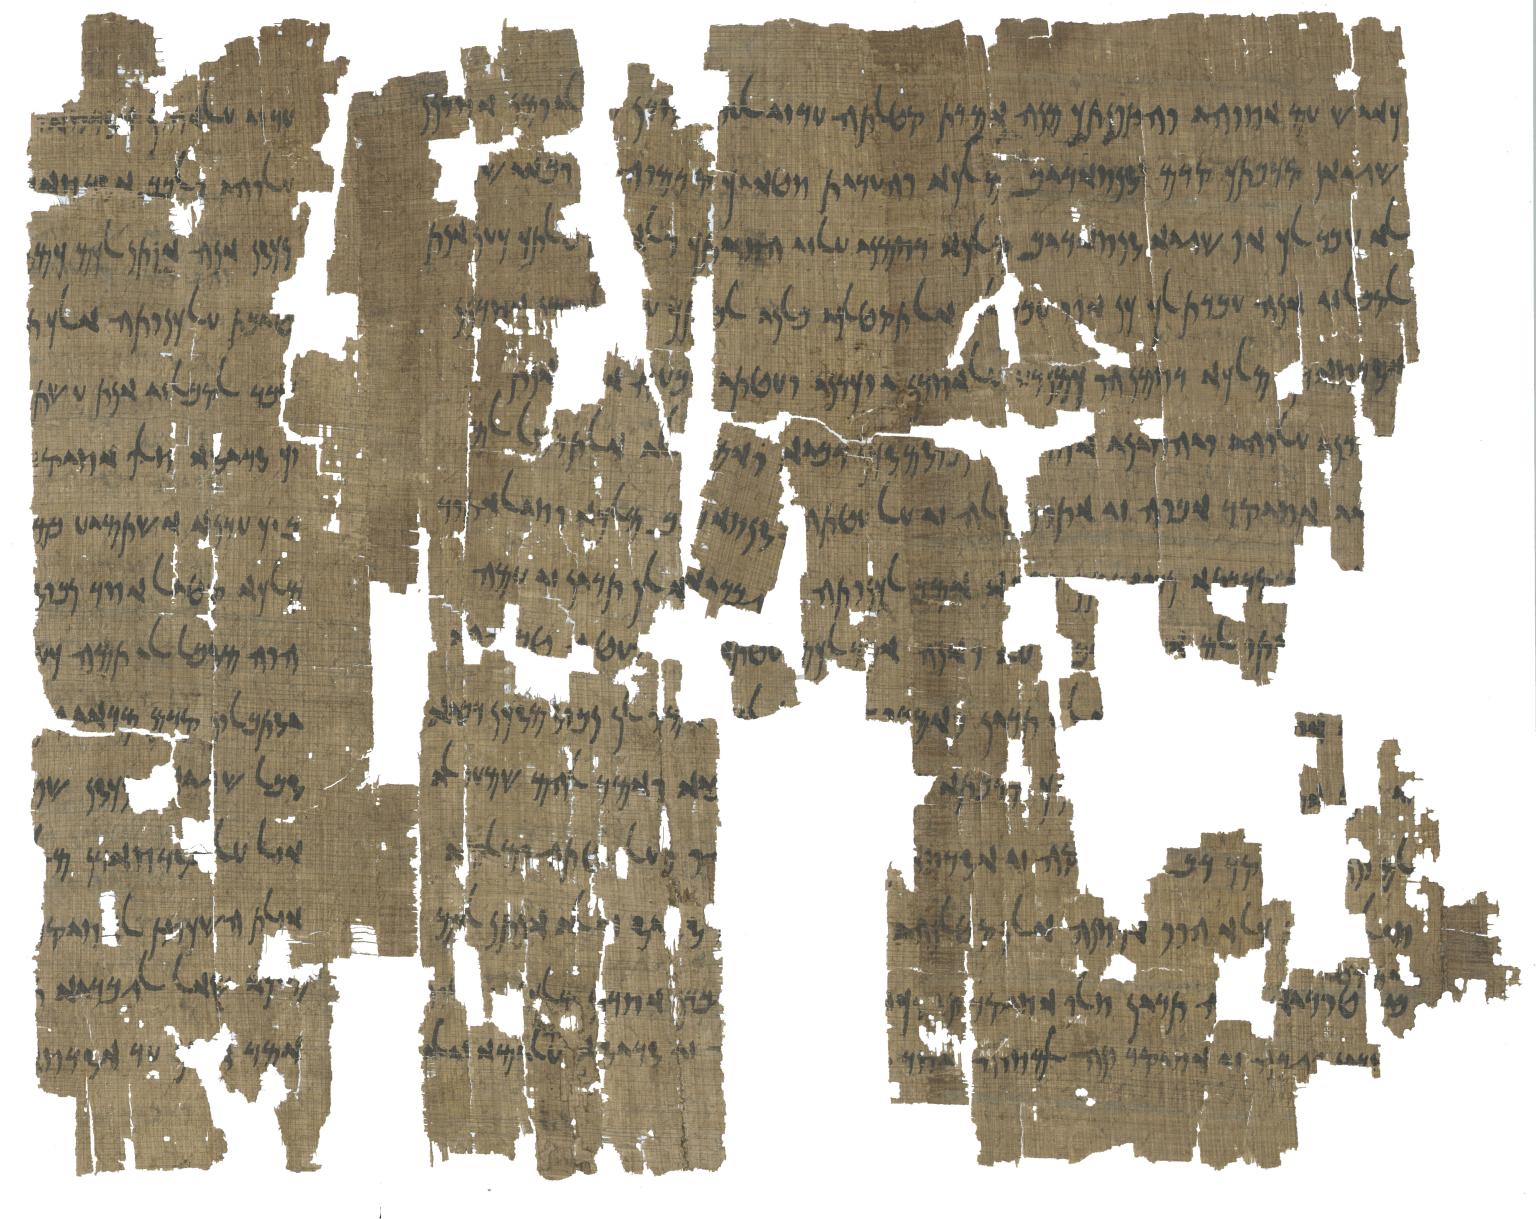 Fragmentary papyrus page of Aramaic writing. 